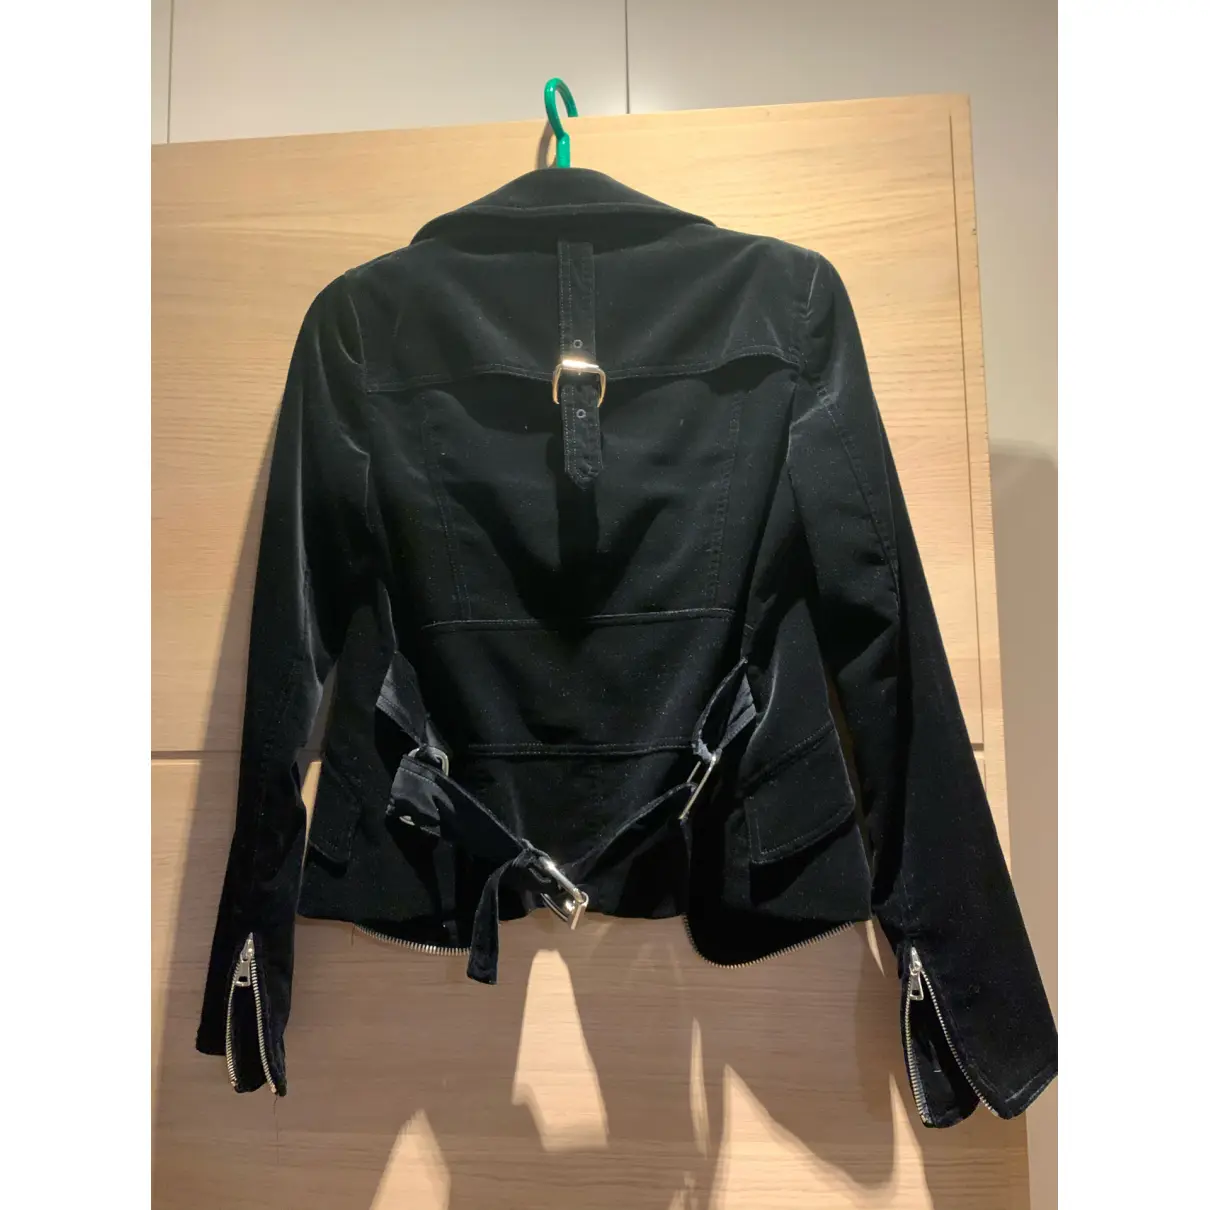 Buy ATOS LOMBARDINI Velvet jacket online